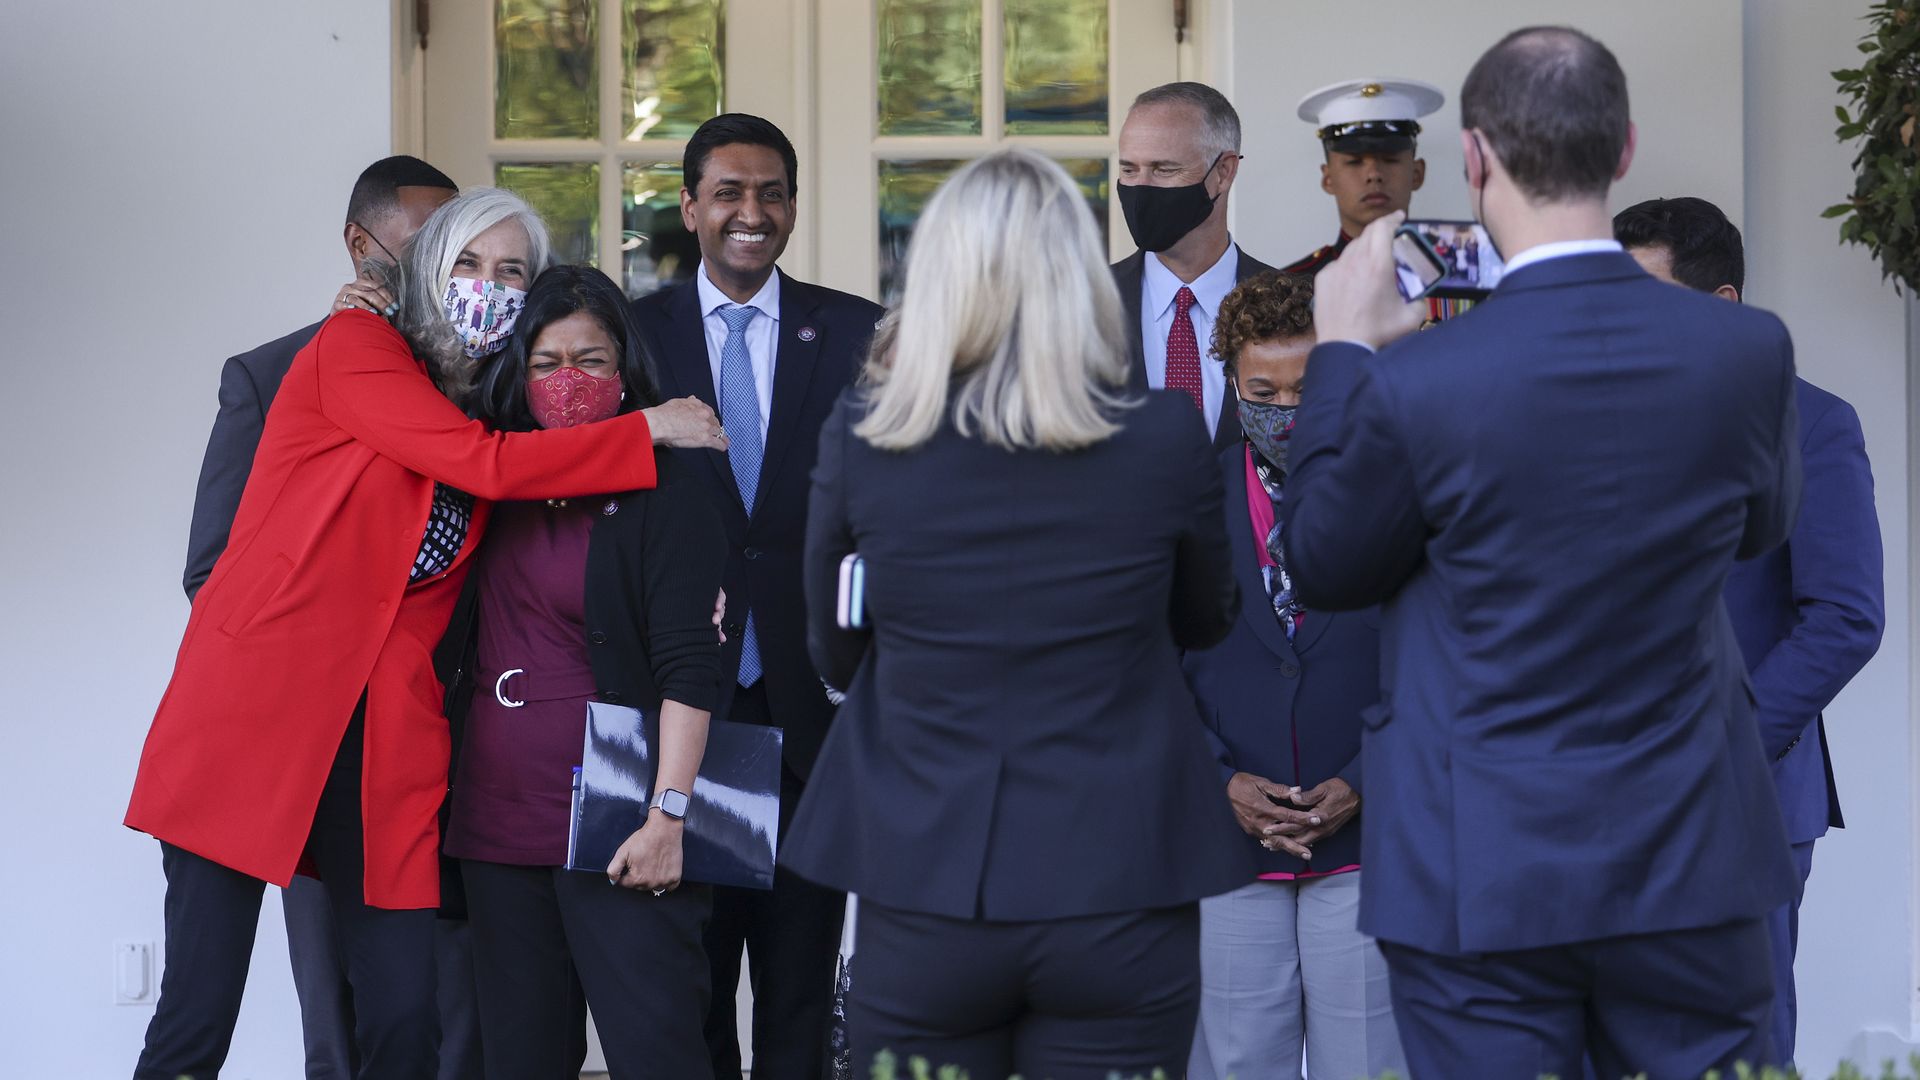 Rep. Katherine Clark is seen hugging Rep. Pramila Jayapal outside the White House.